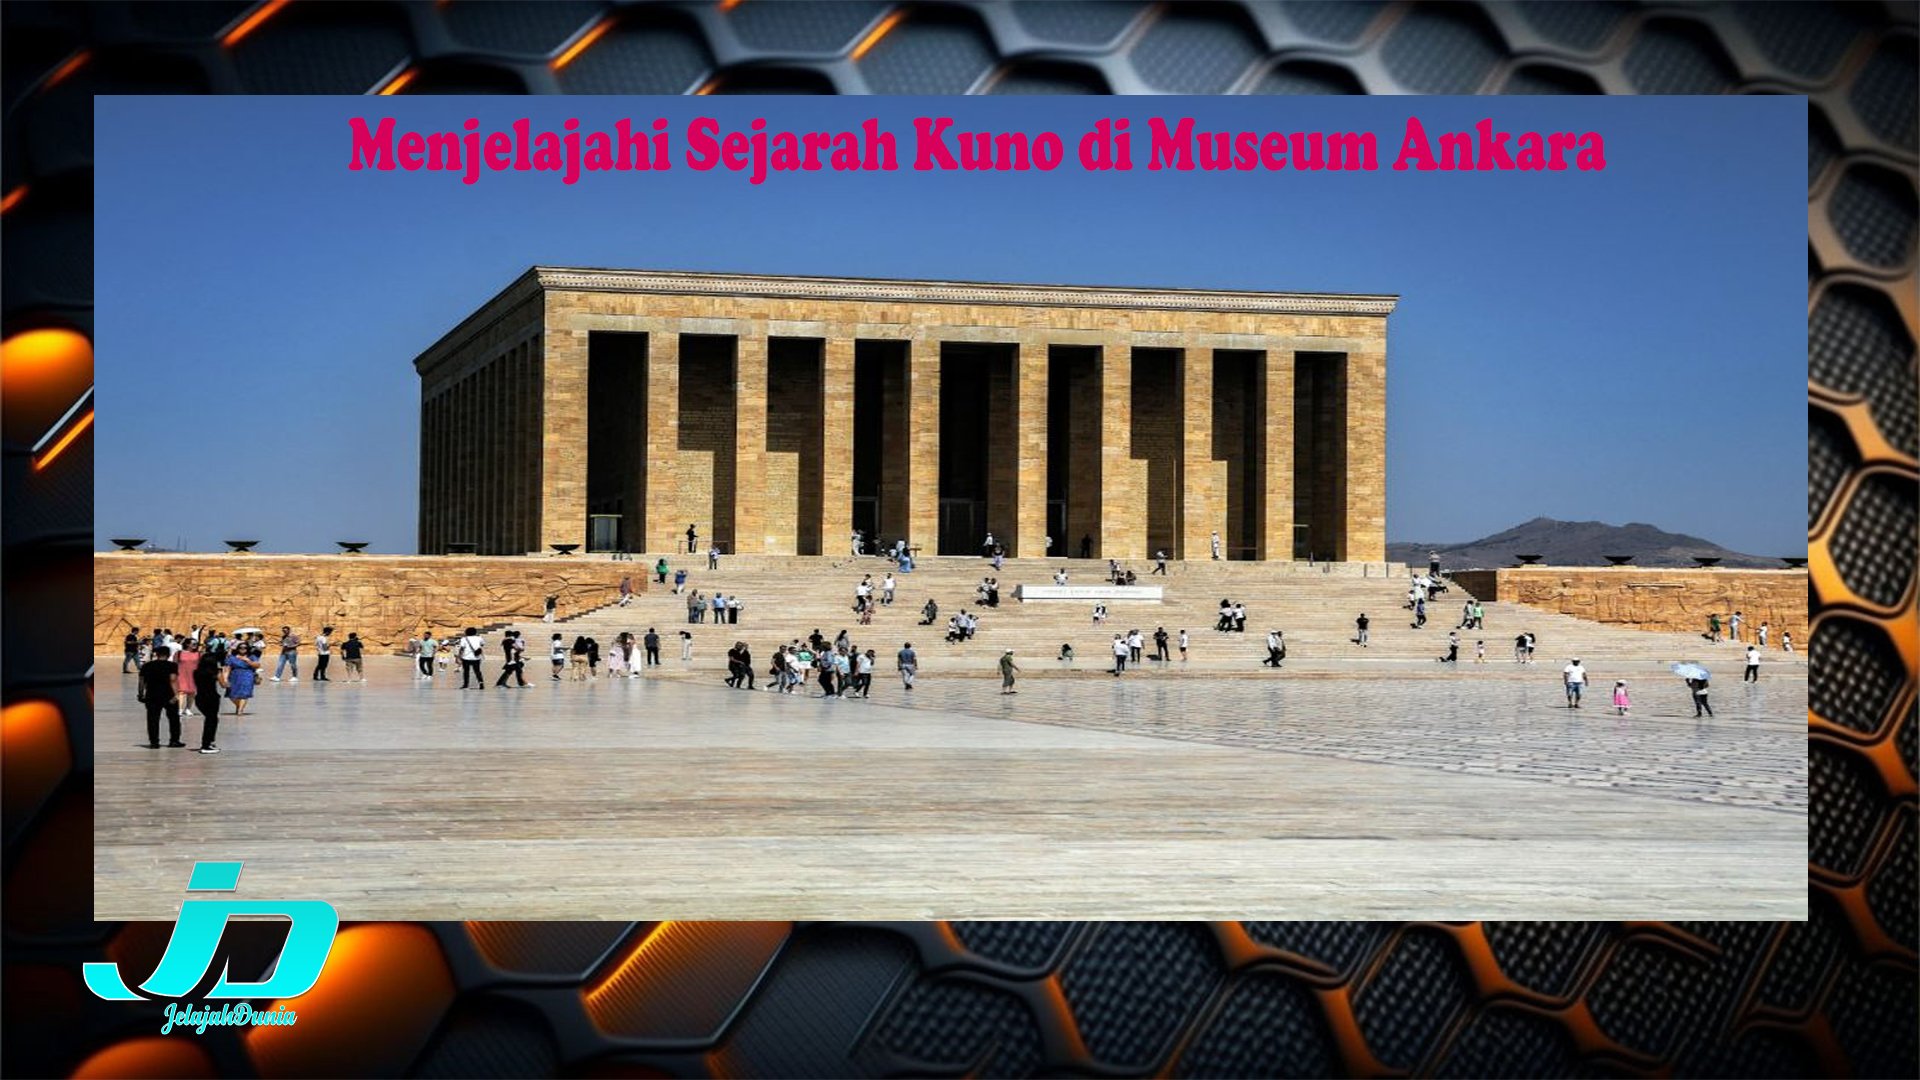 Menjelajahi Sejarah Kuno di Museum Ankara